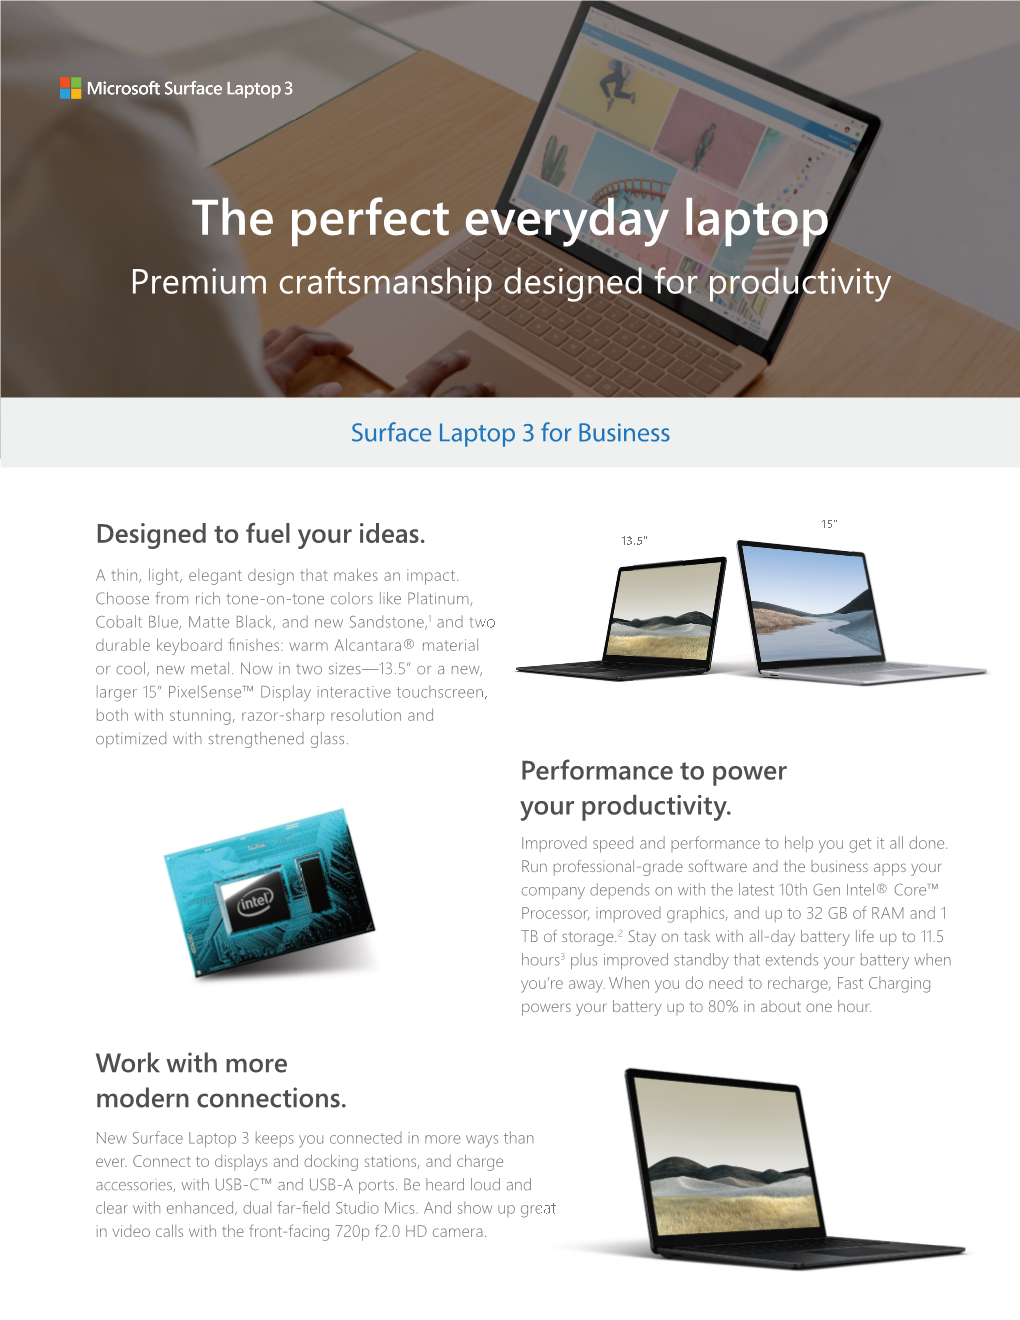 The Perfect Everyday Laptop Premium Craftsmanship Designed for Productivity